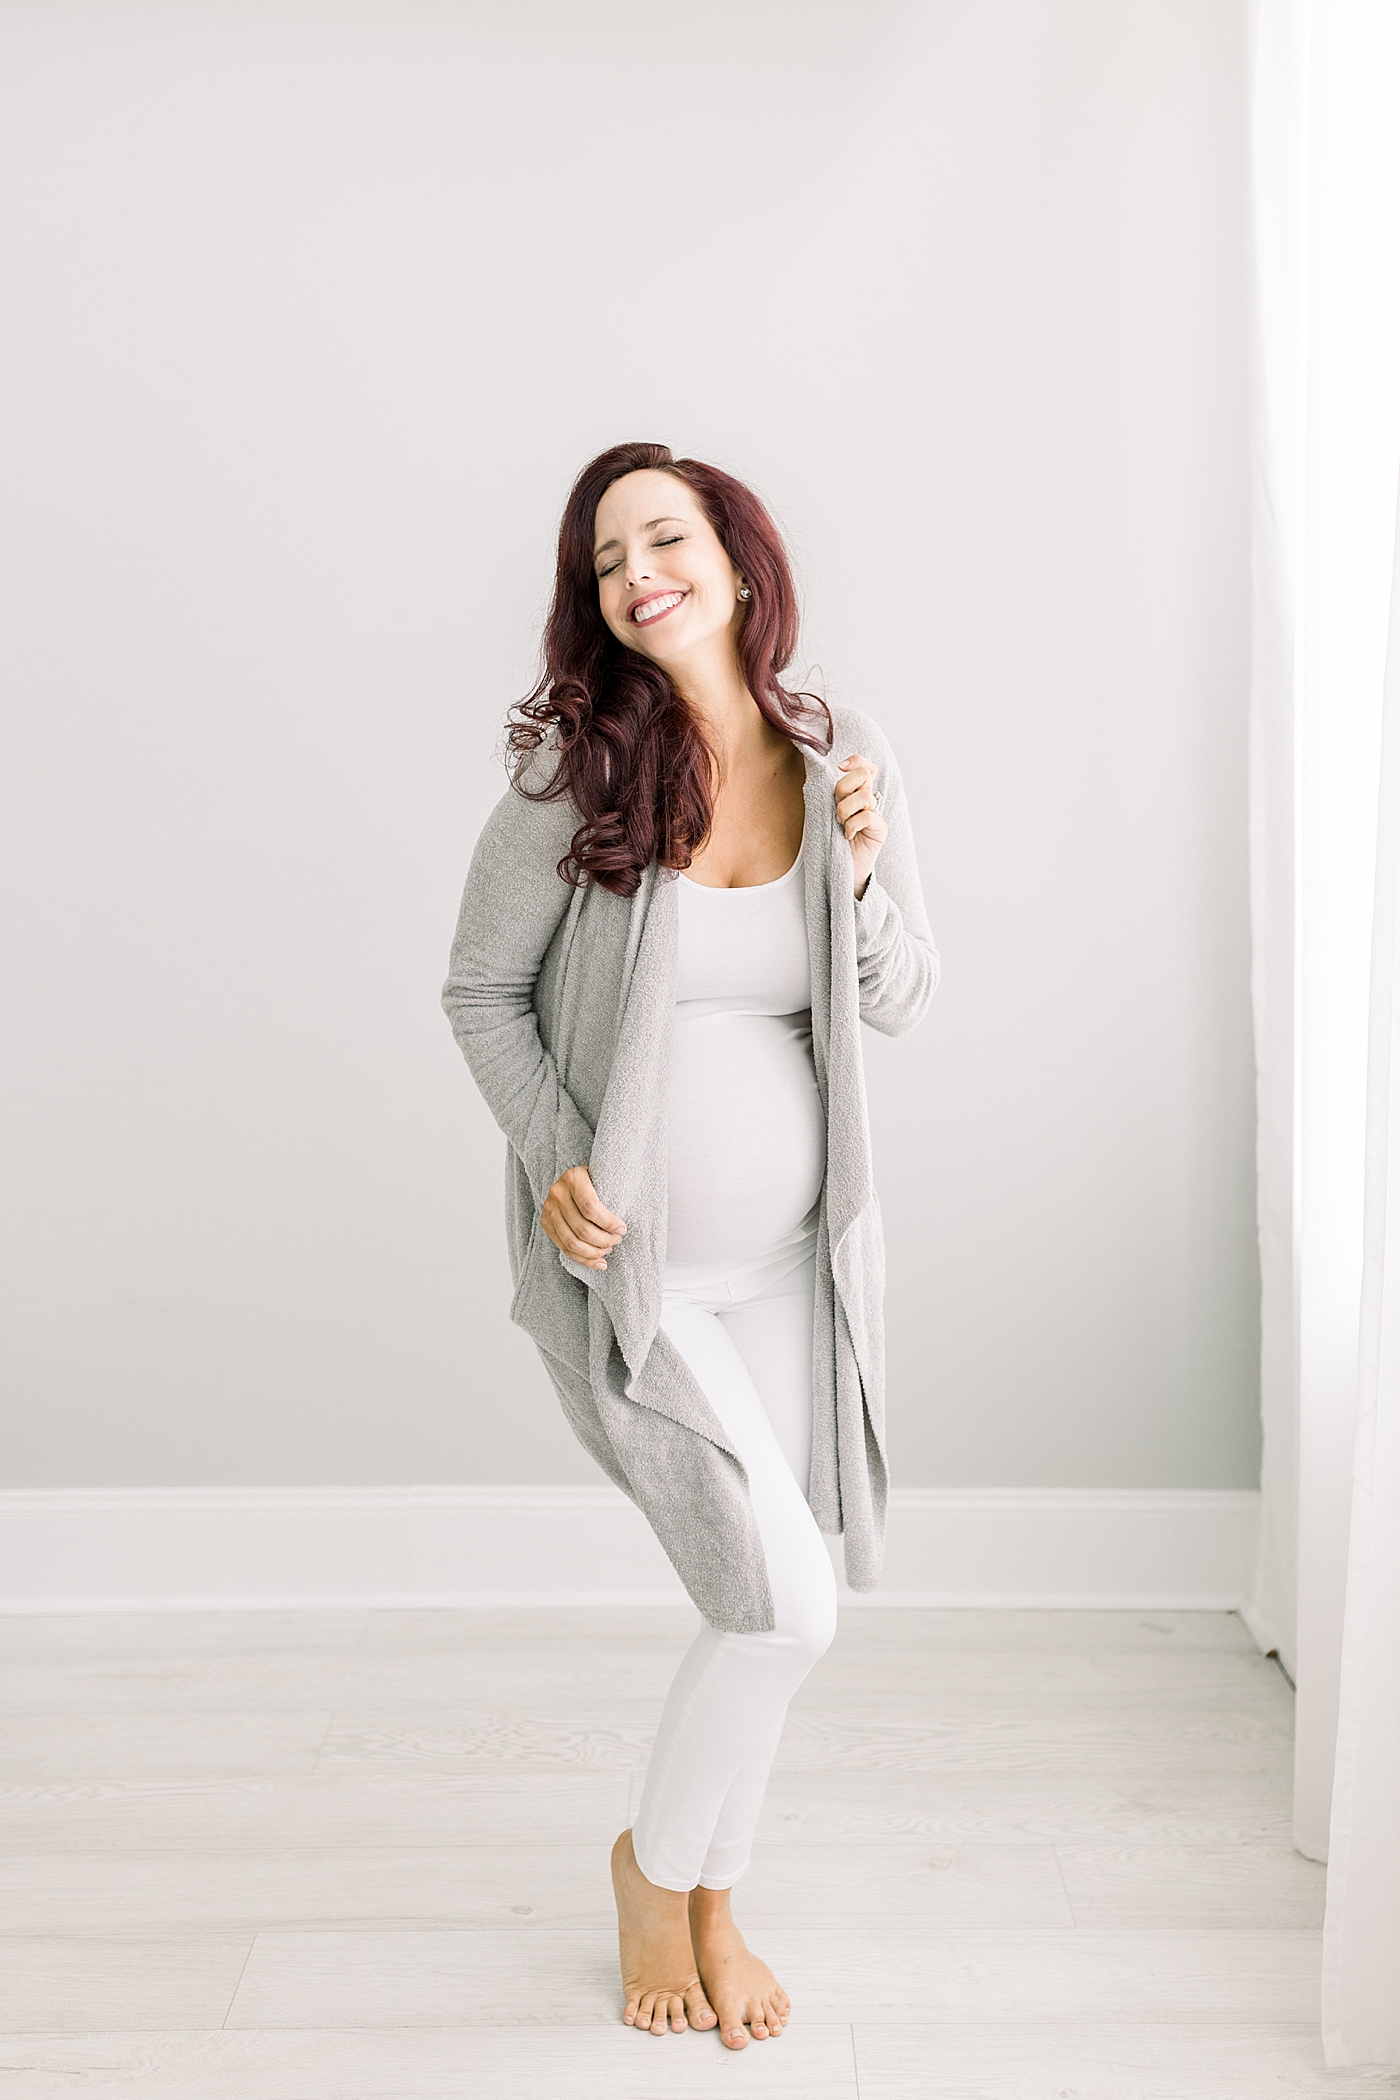 https://brittanyelise.com/wp-content/uploads/2021/07/5-maternity-must-haves-brittany-elise-photography_0004.jpg